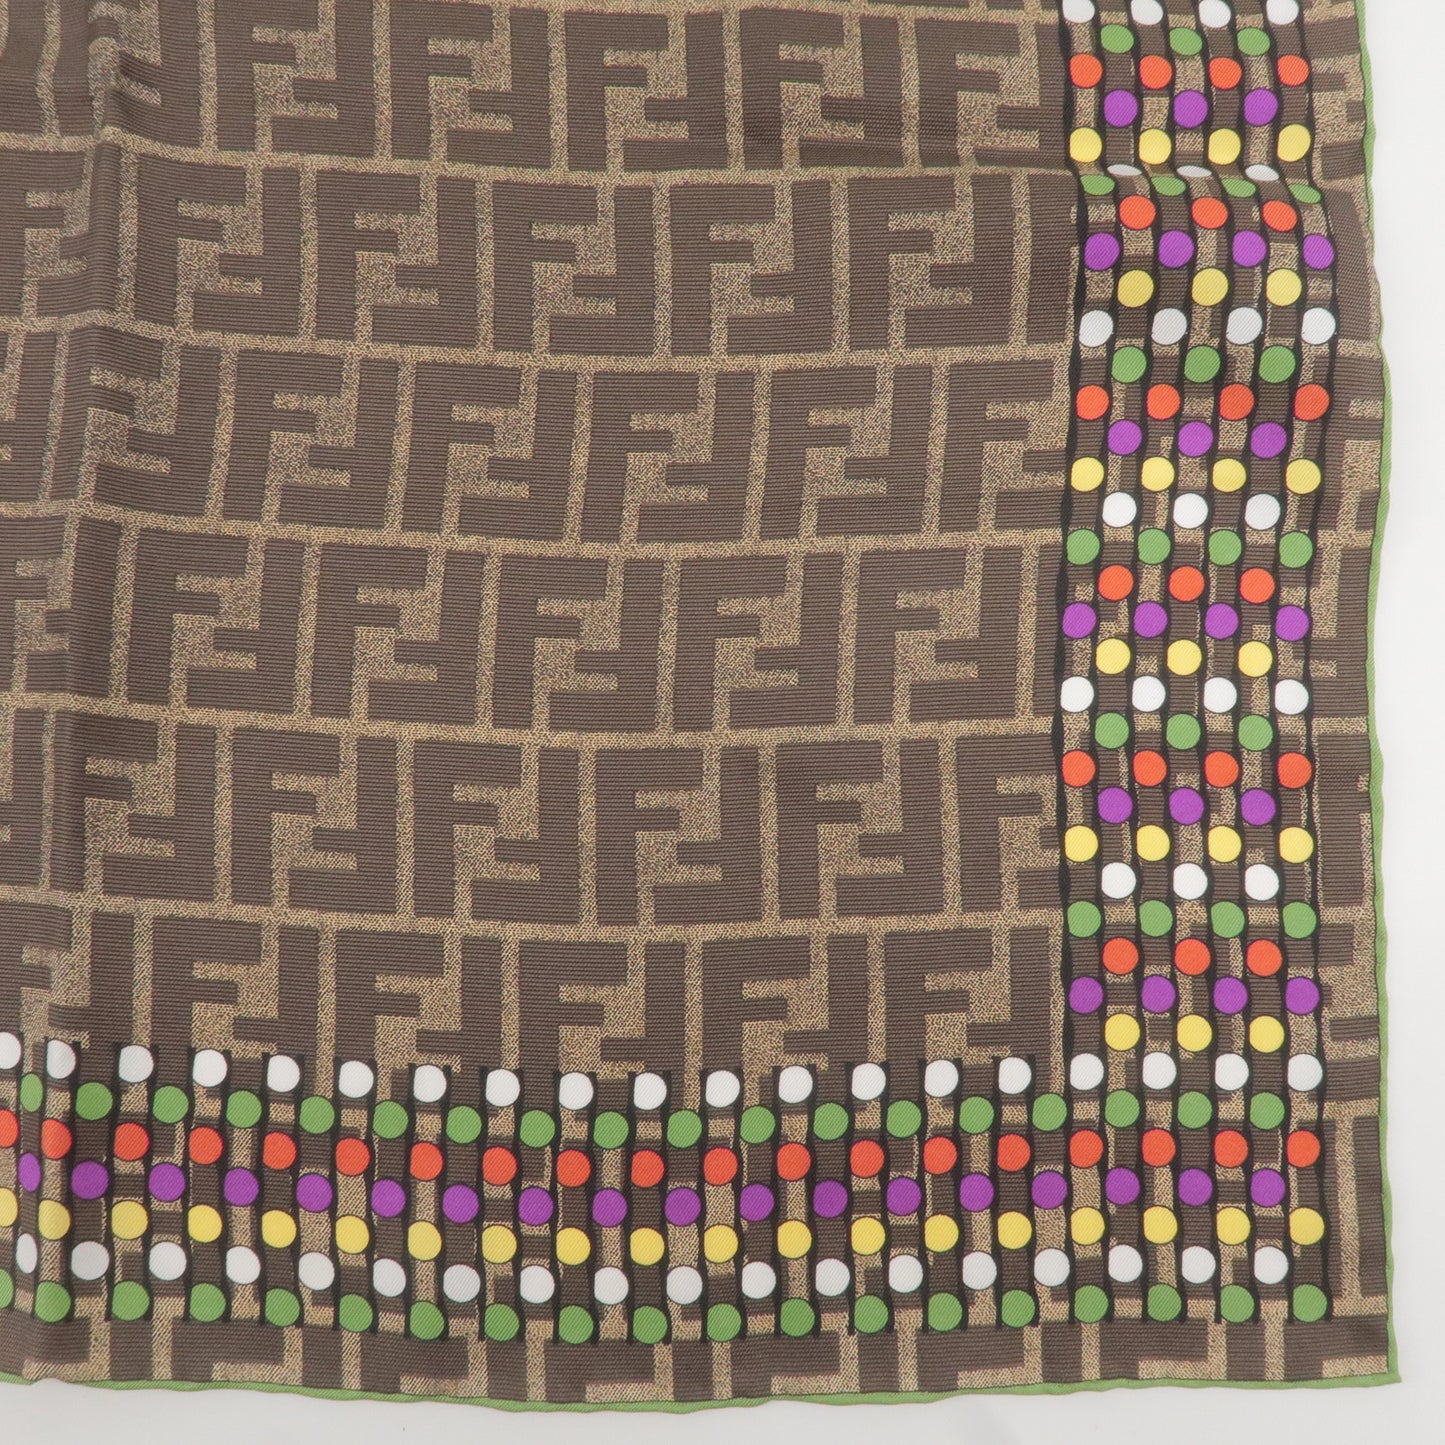 FENDI Zucca Print 100% Silk Scarf Colorful Dots Brown Green